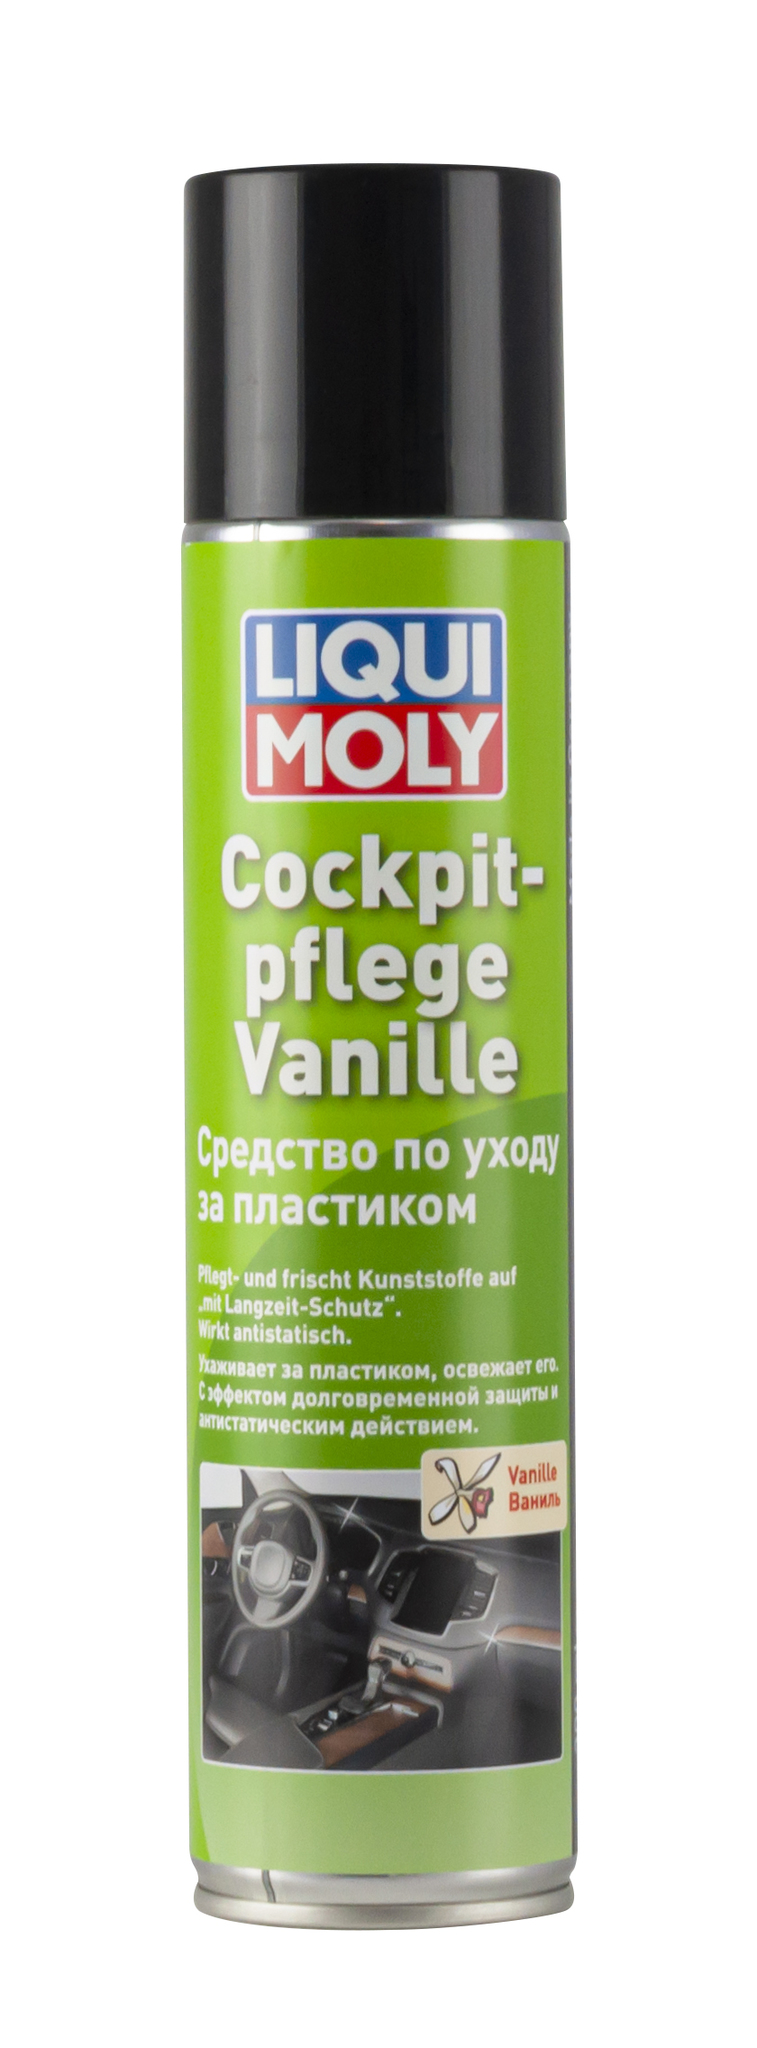 Liqui Moly Cockpit-Pflege Vanille Средство для ухода за пластиком (ваниль)